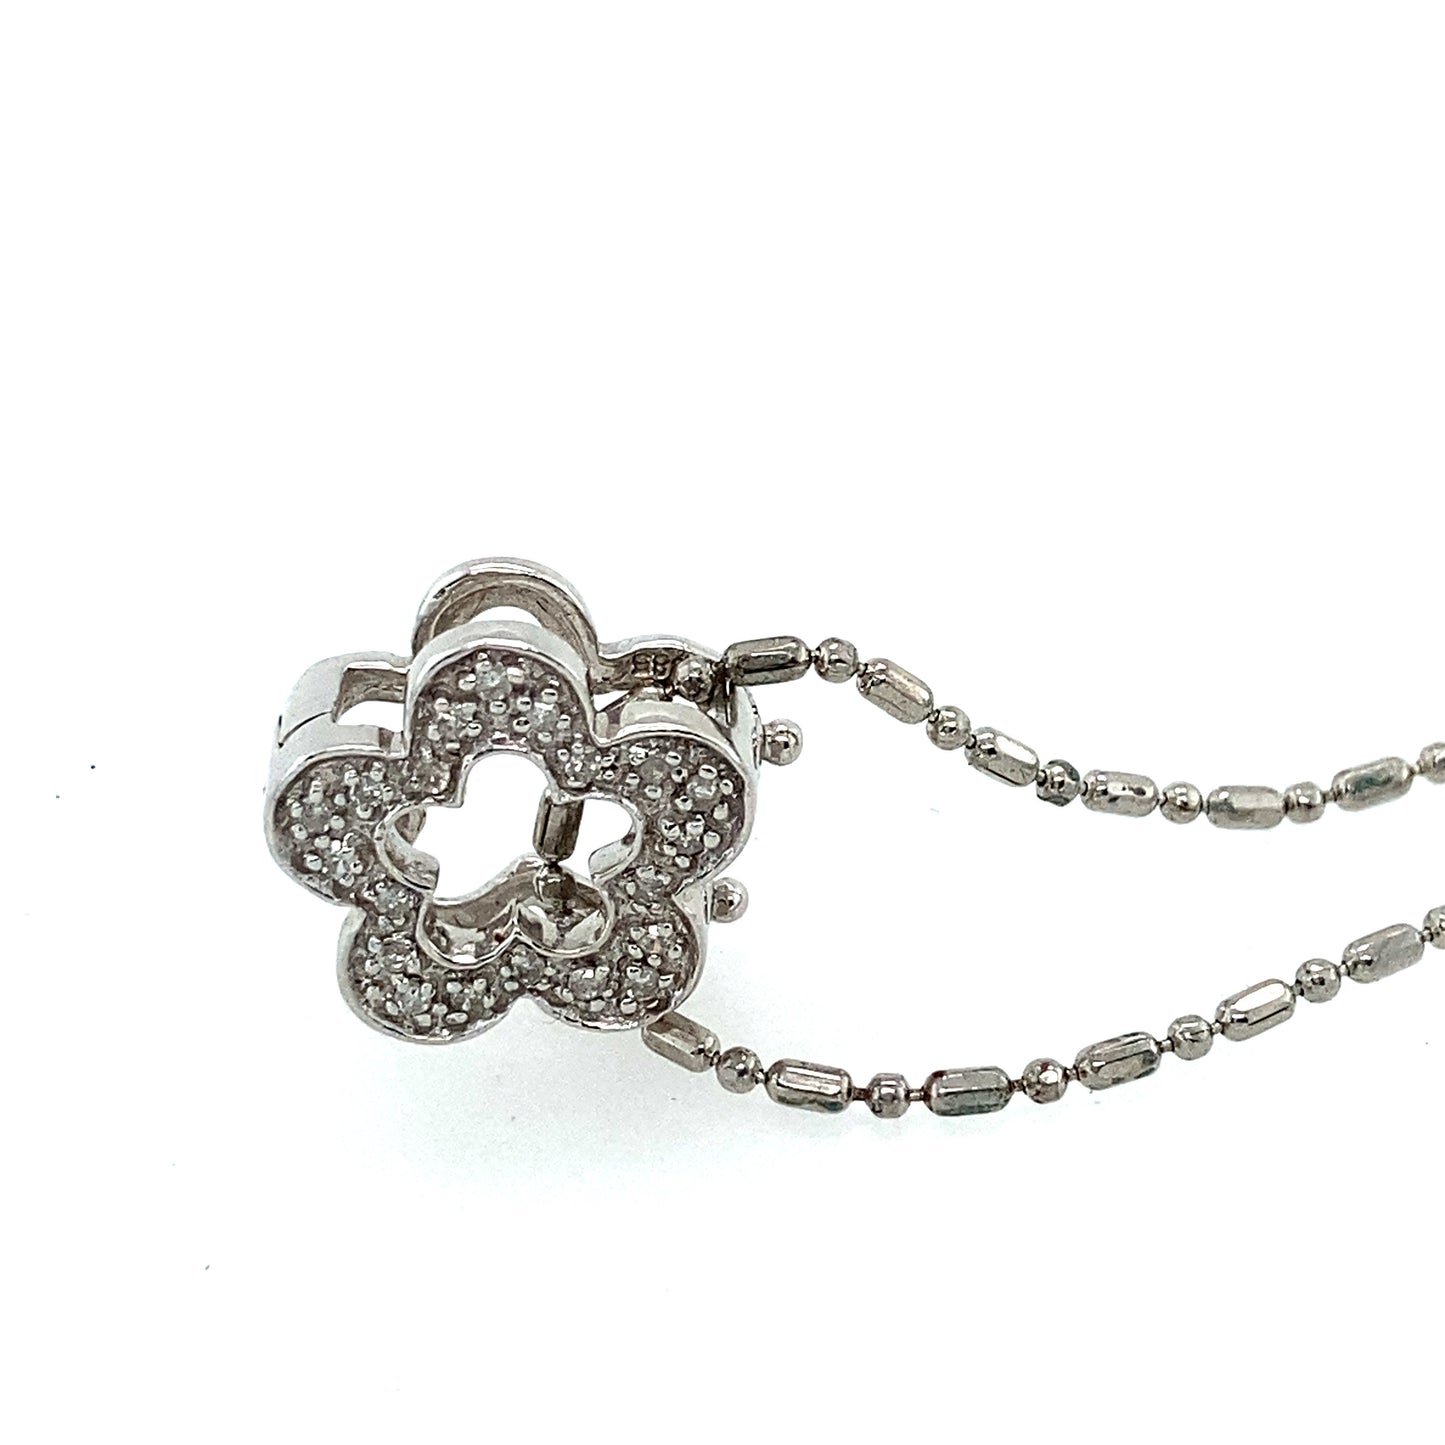 Necklace 14k white gold, diamond, chain